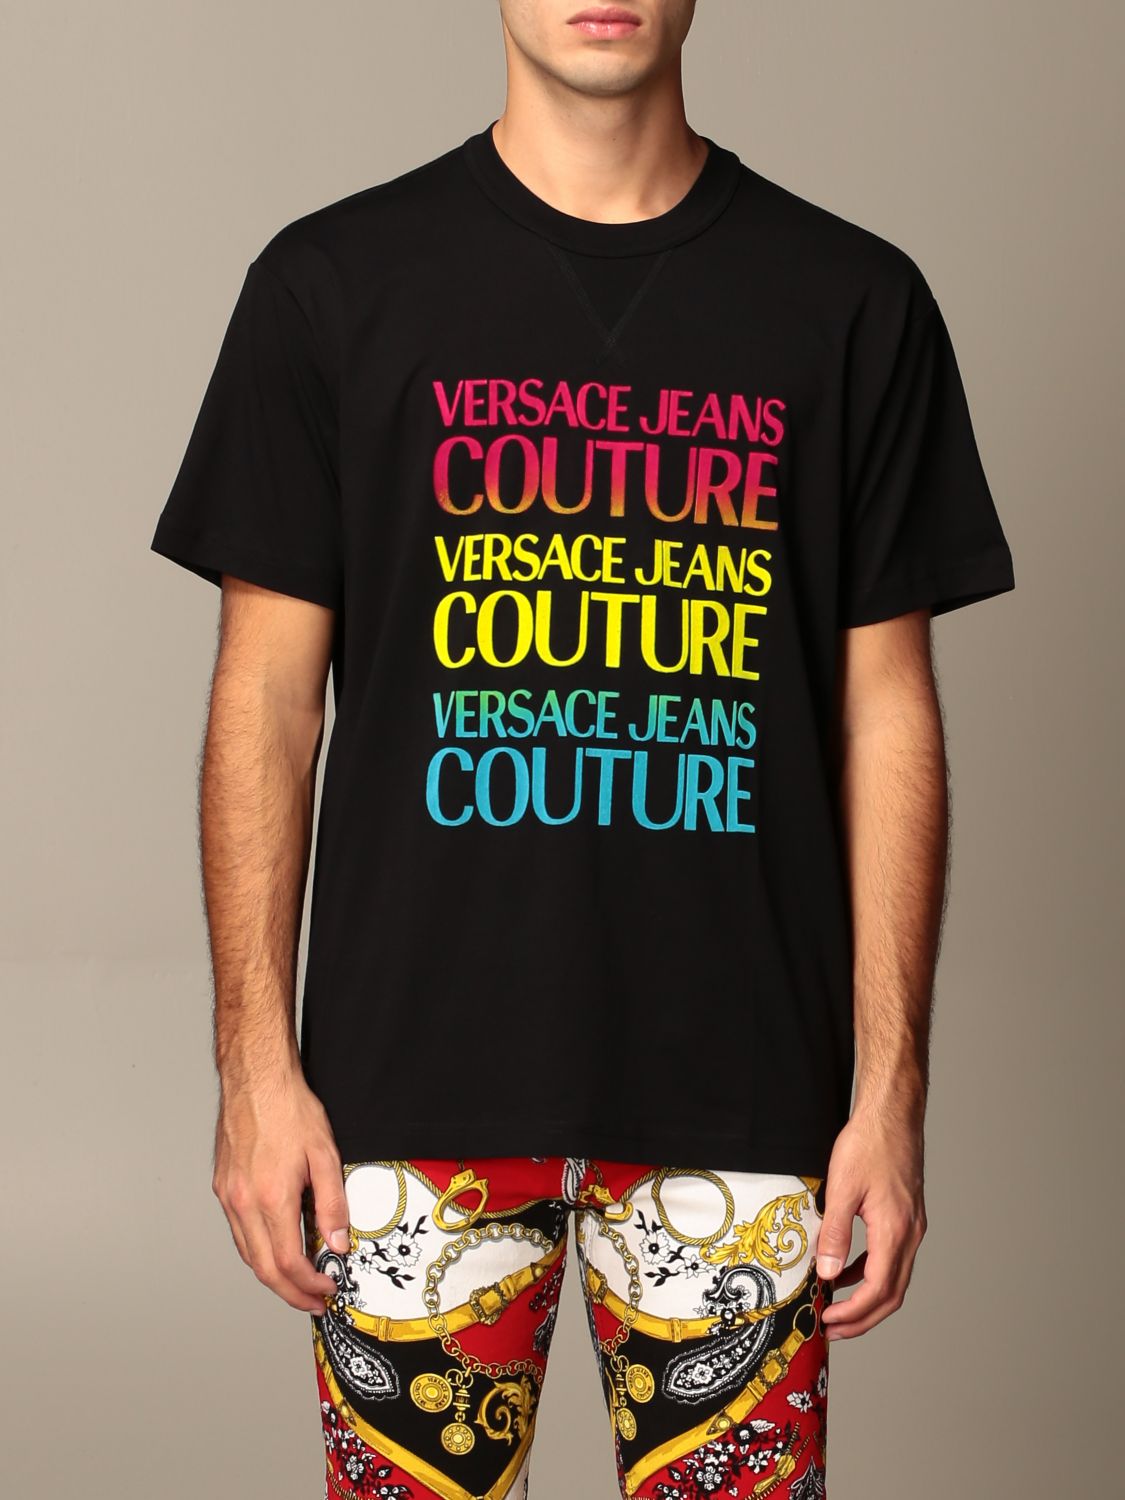 versace multicolor logo t shirt